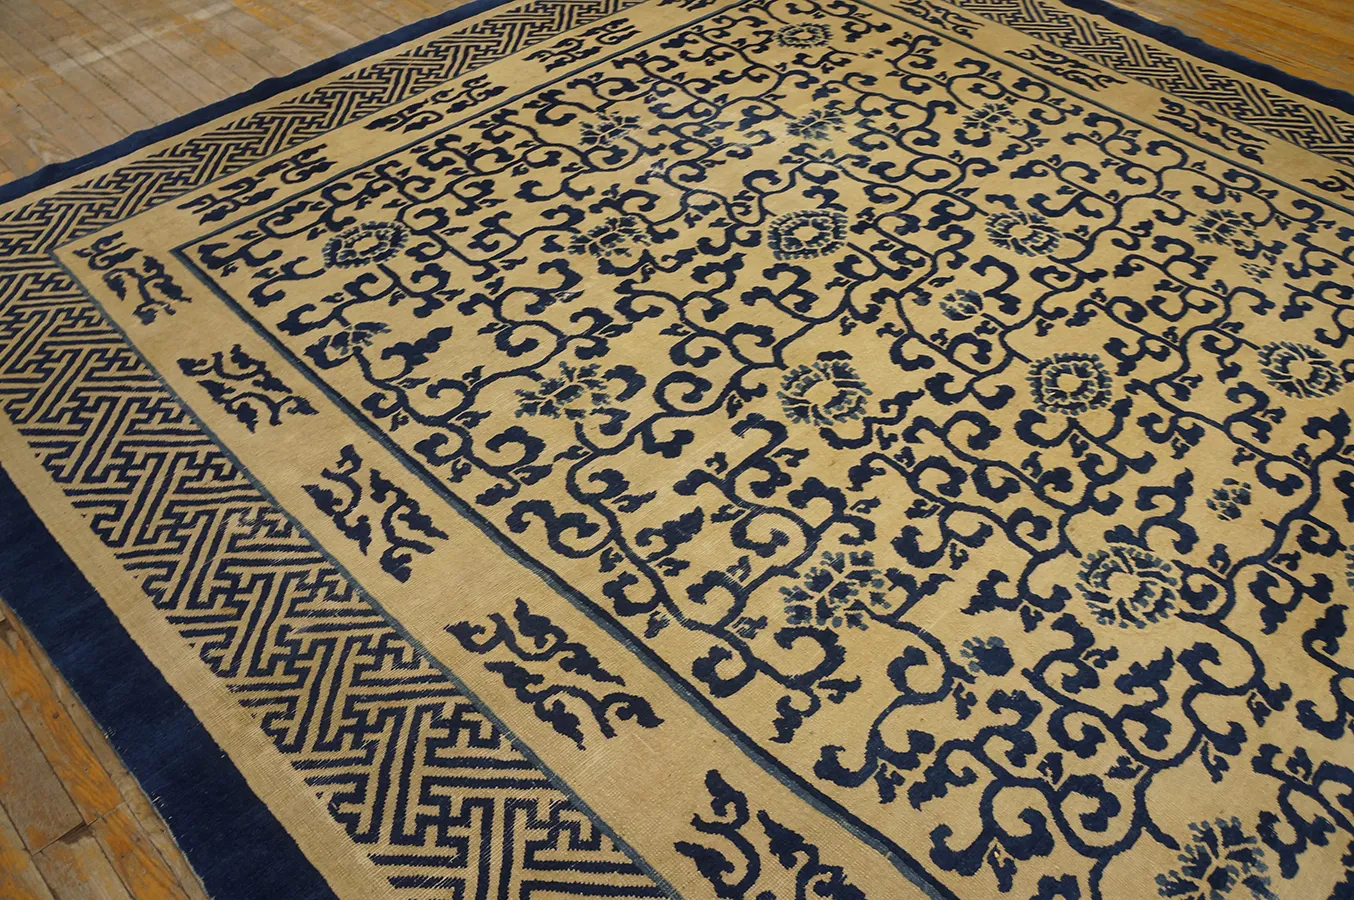 Chinese - Peking carpet 8' 10" x 11' 6" - beige